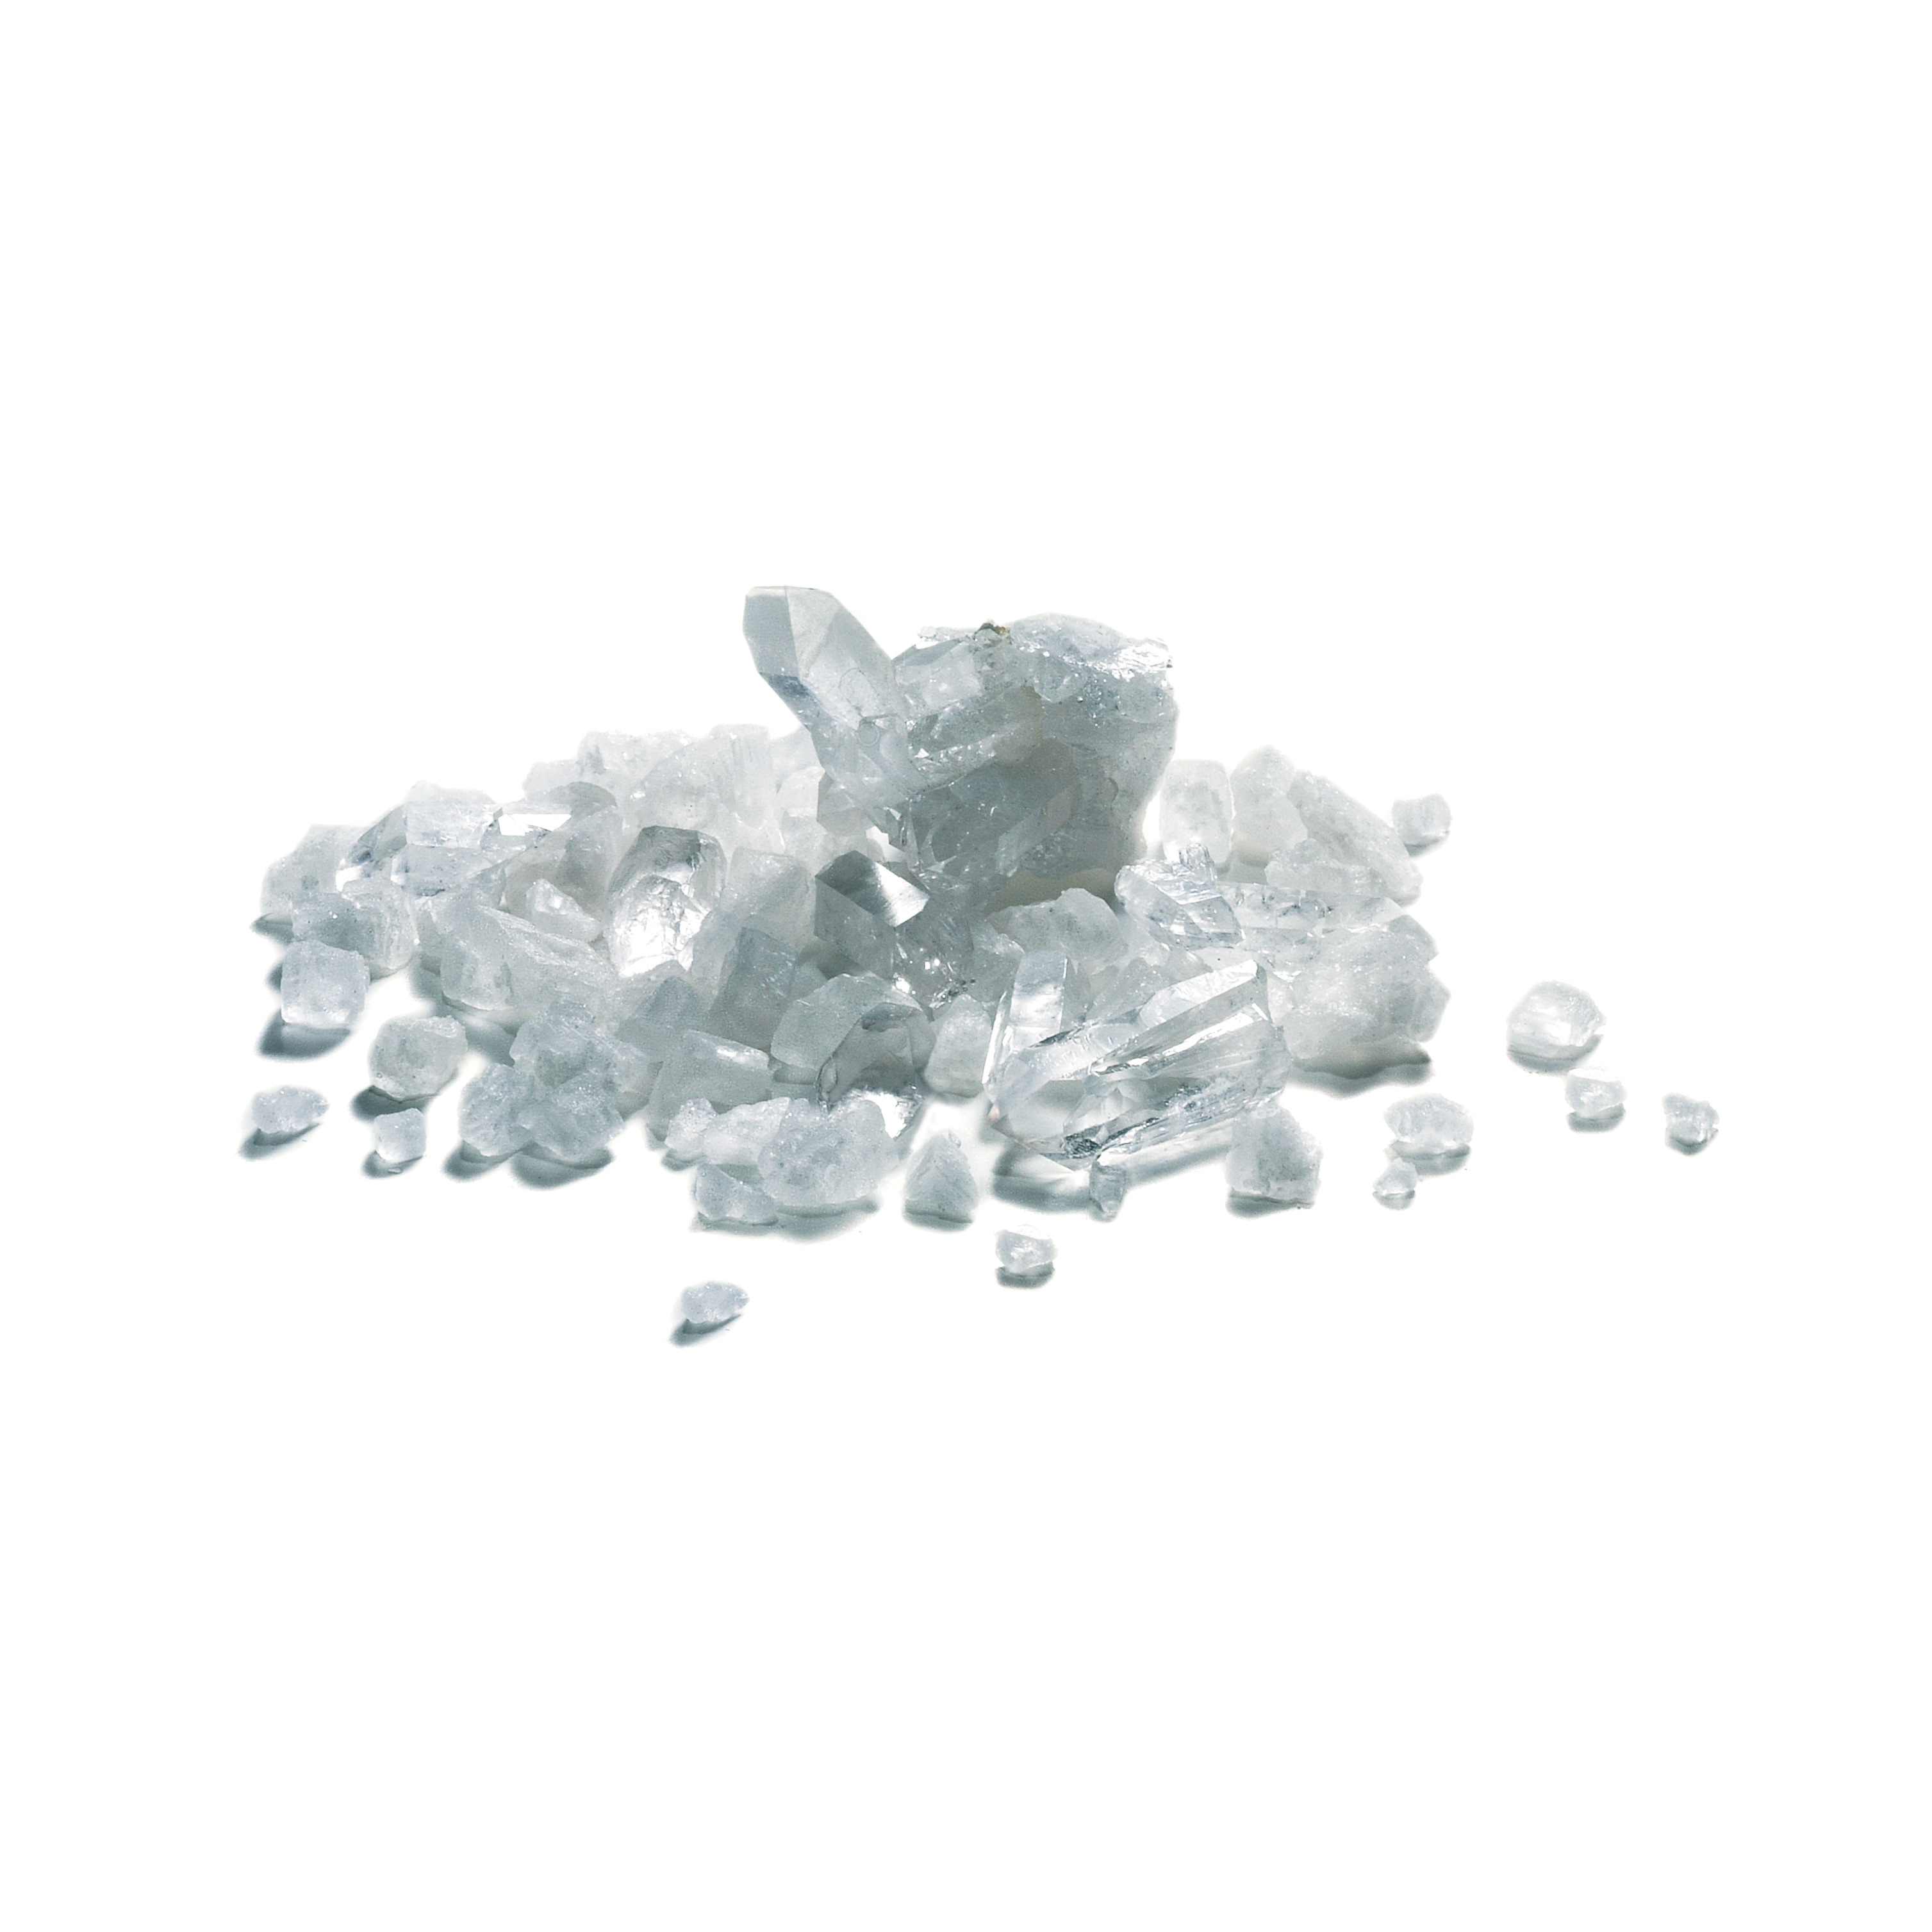 Original-piezo-material-Rochelle-salt